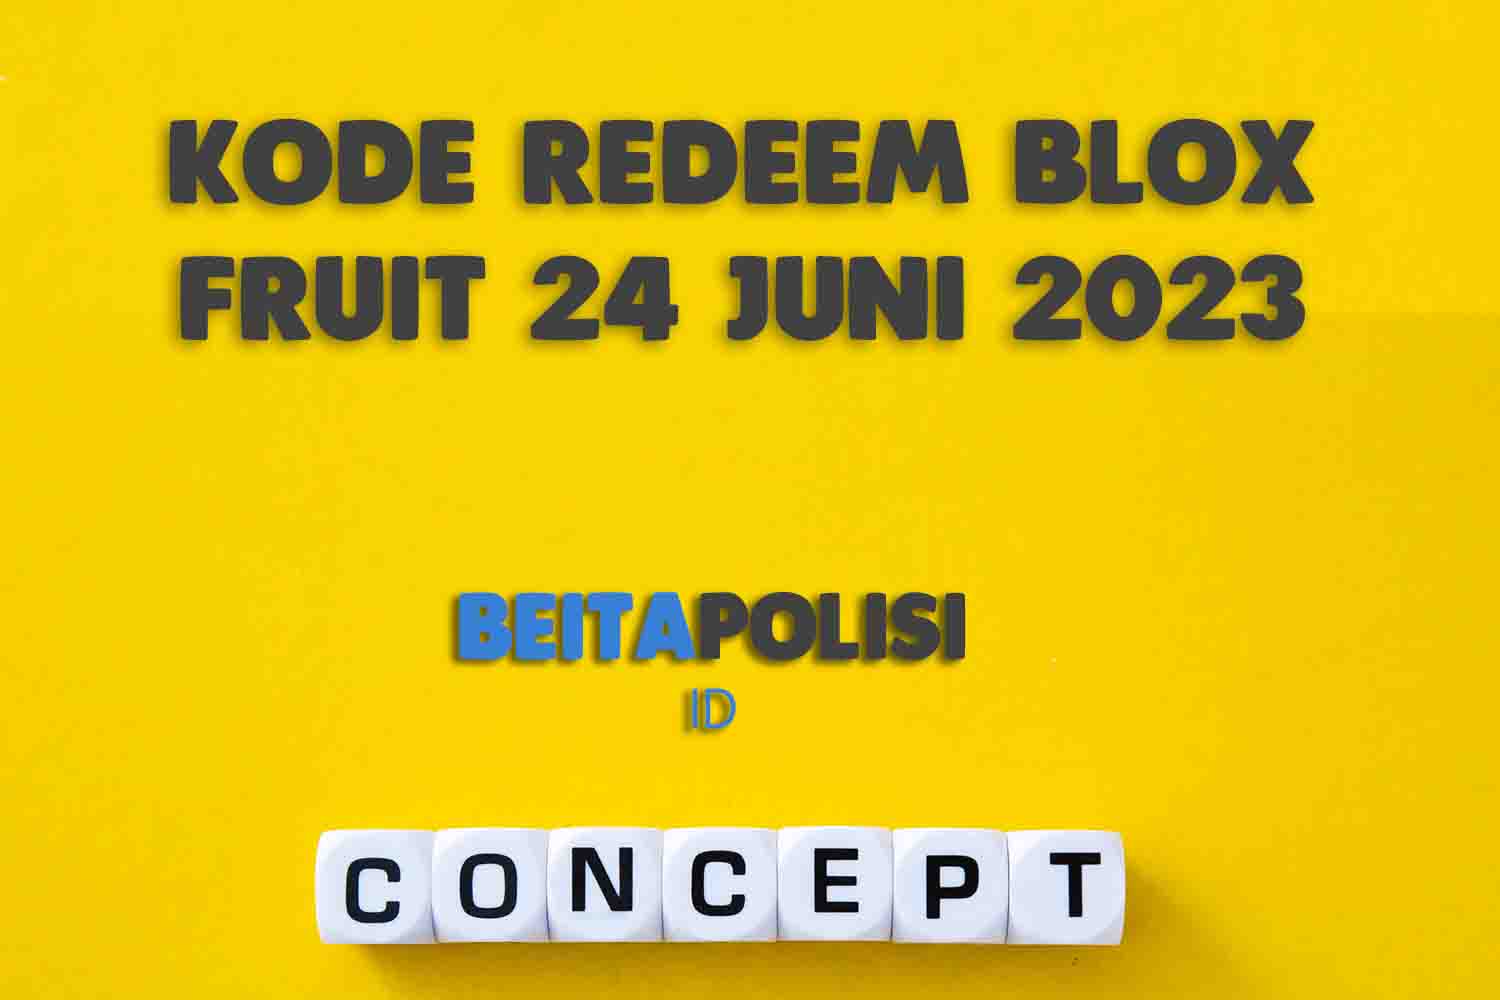 Kode Redeem Blox Fruit 24 Juni 2023